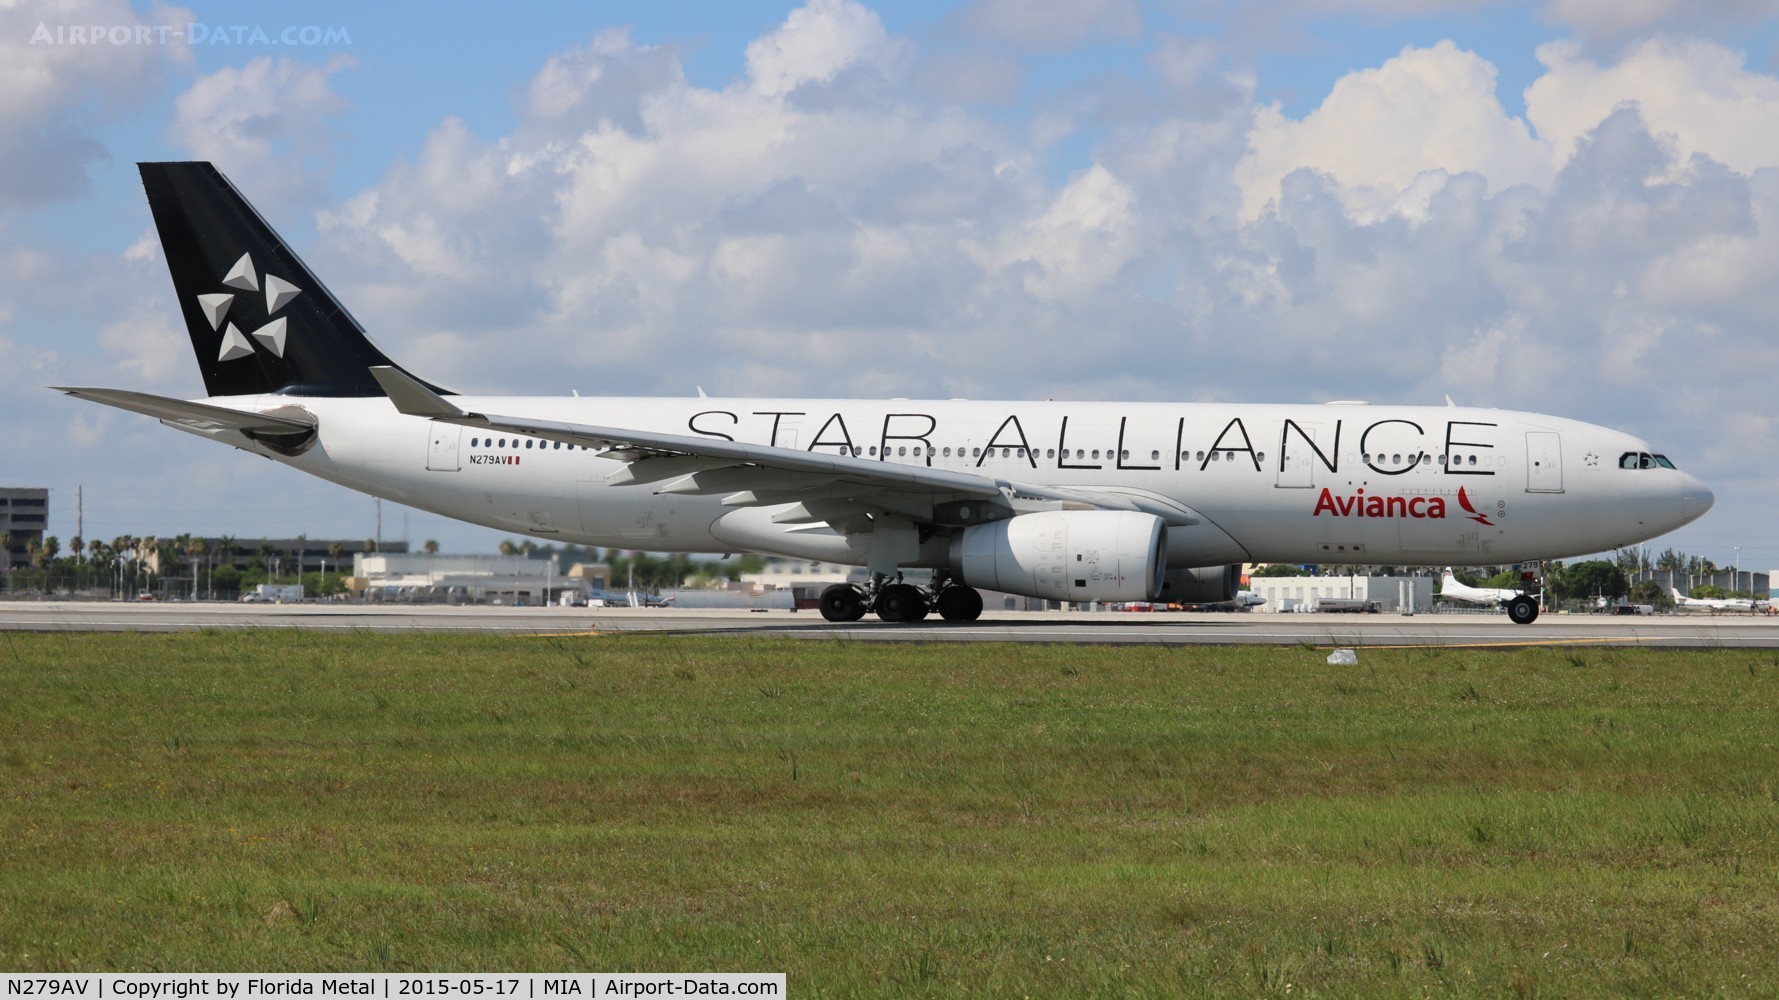 N279AV, 2011 Airbus A330-243 C/N 1279, Avianca Star Alliance